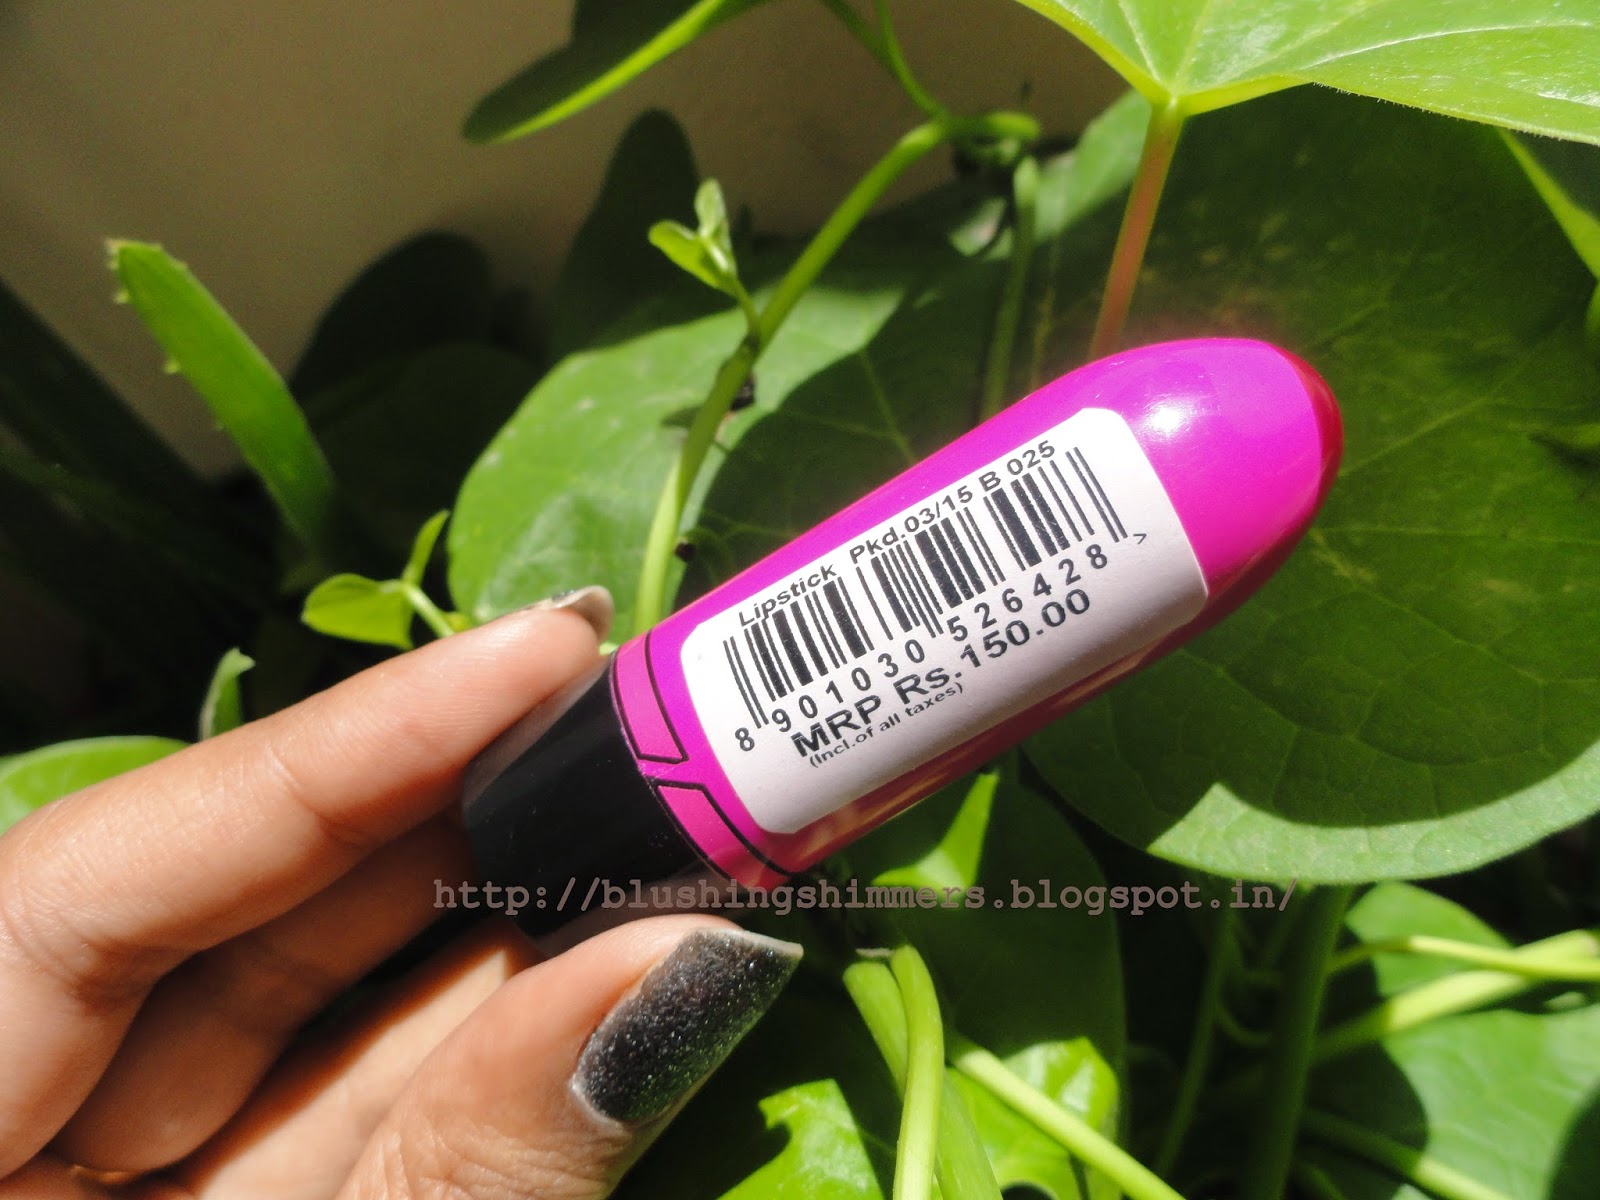 Elle 18 Colour boost Miss pink lipstick review